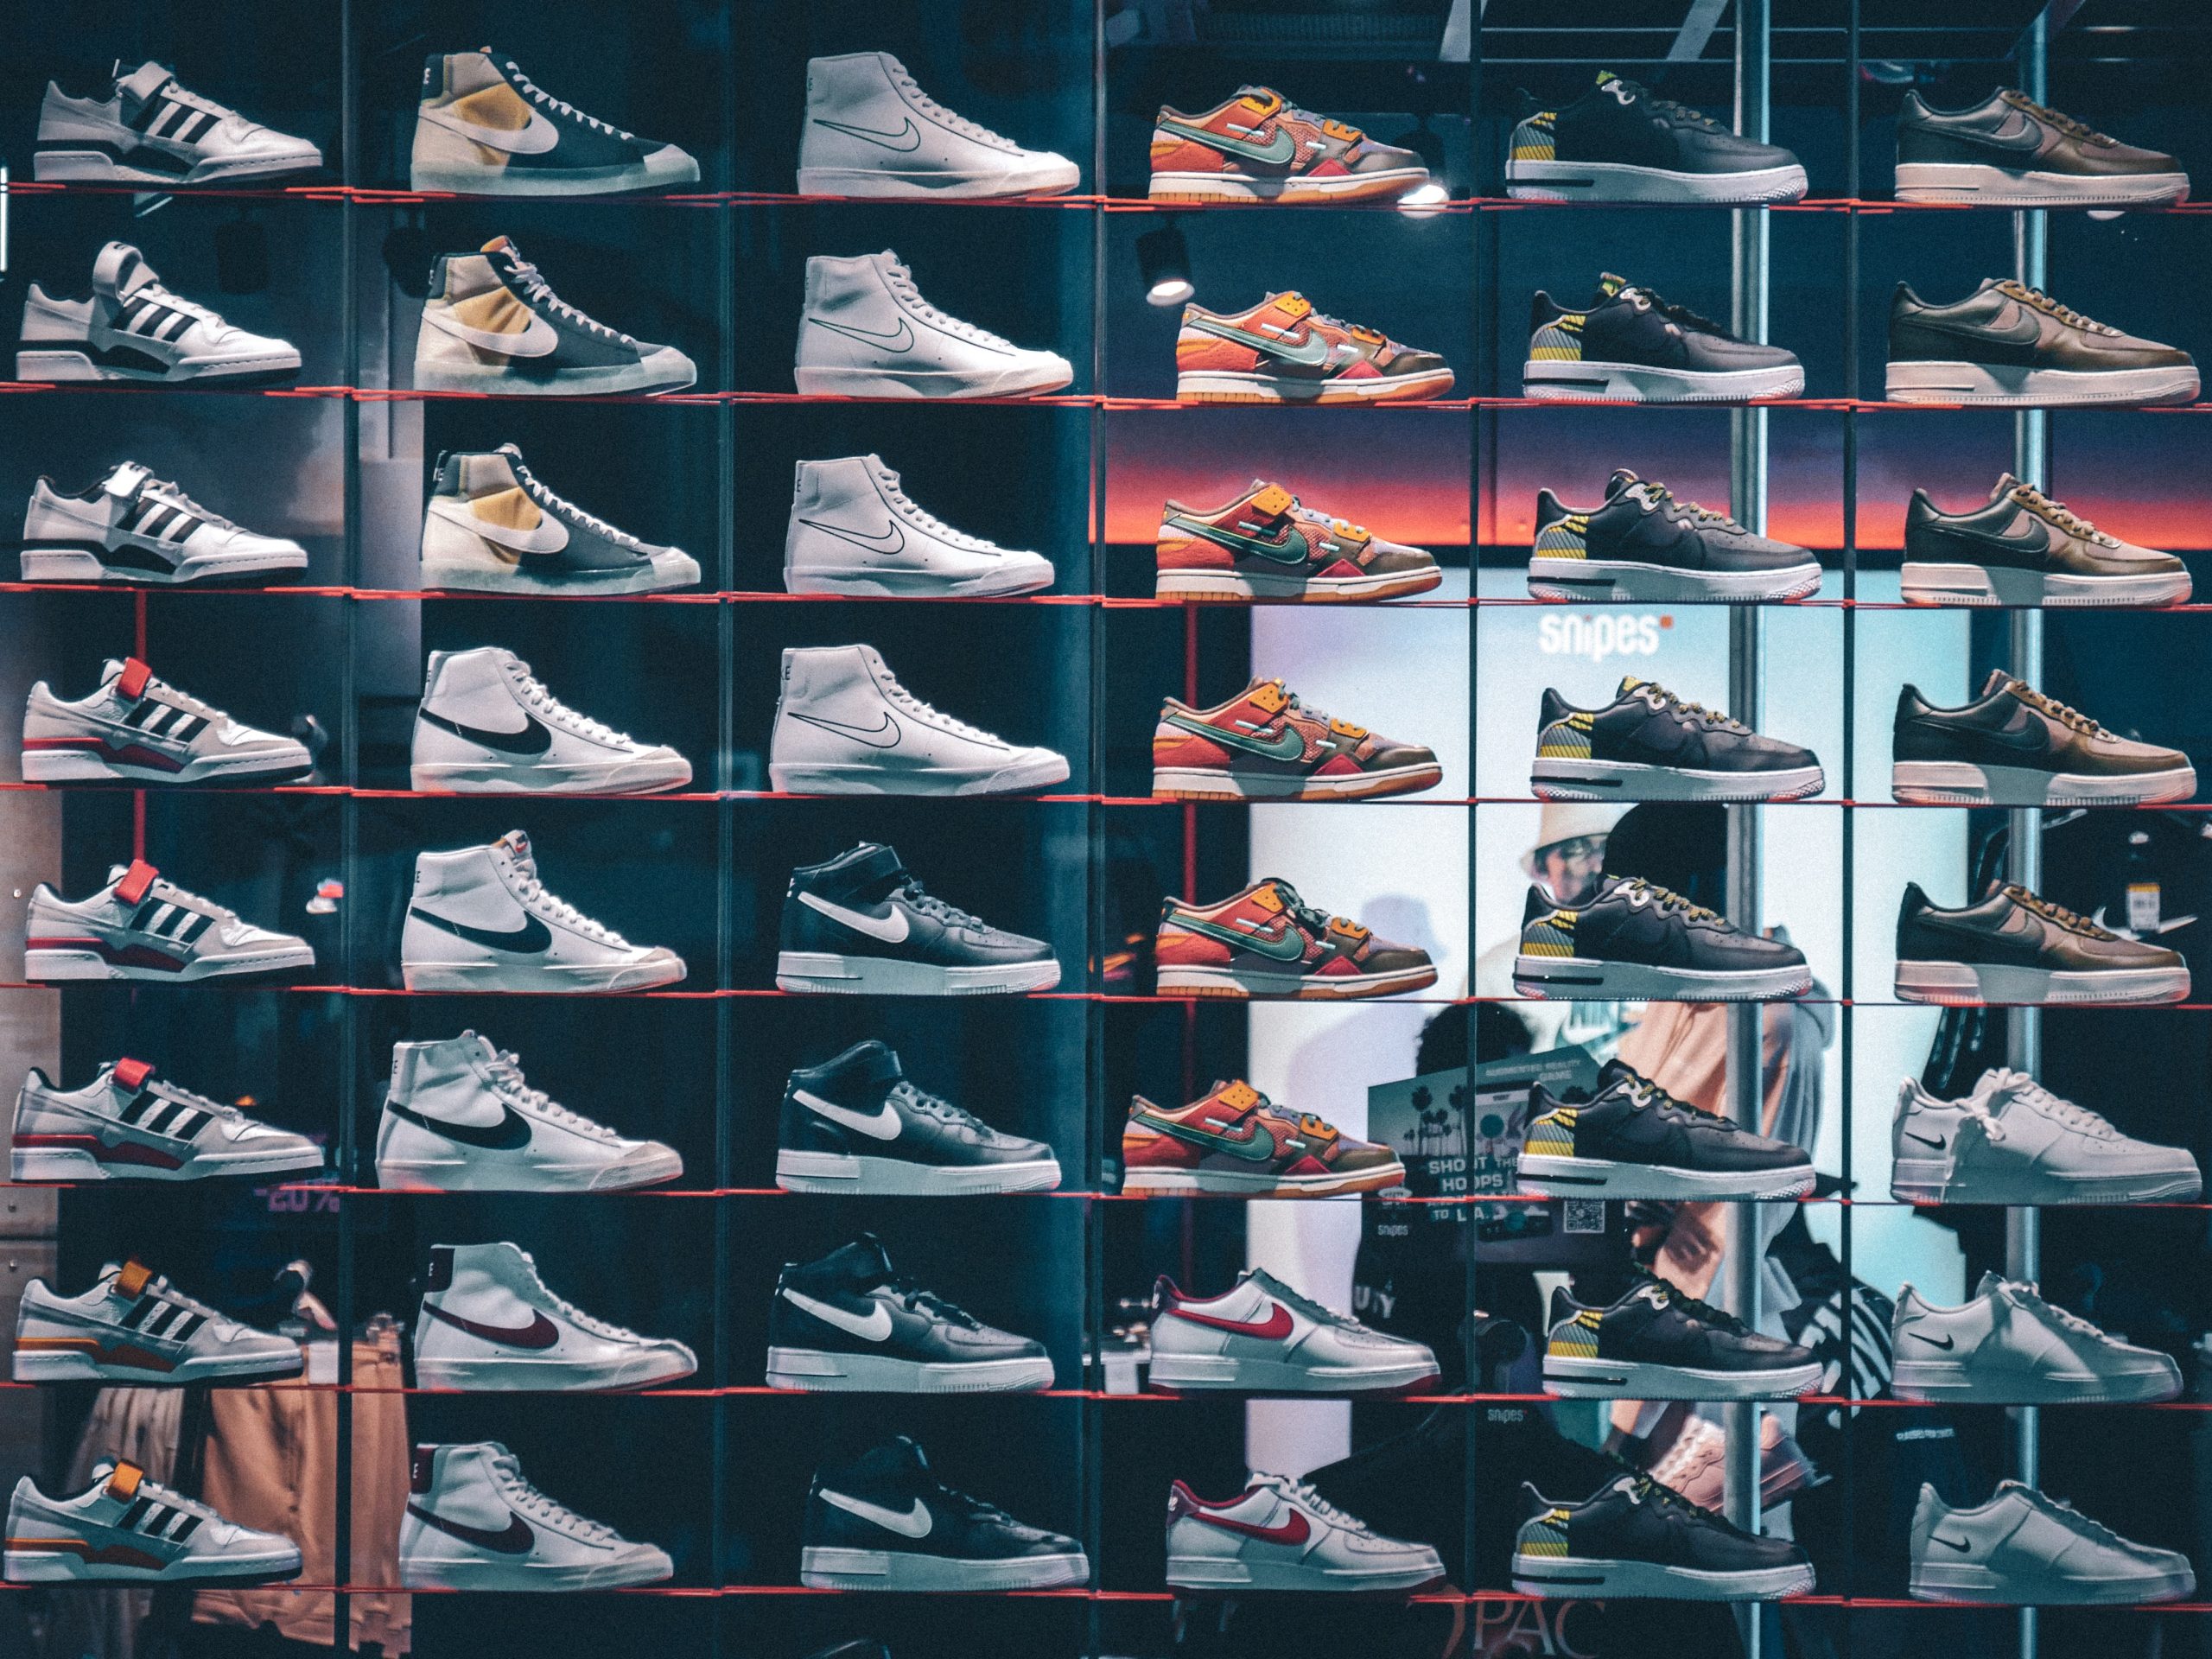 Wall of Nike footwear